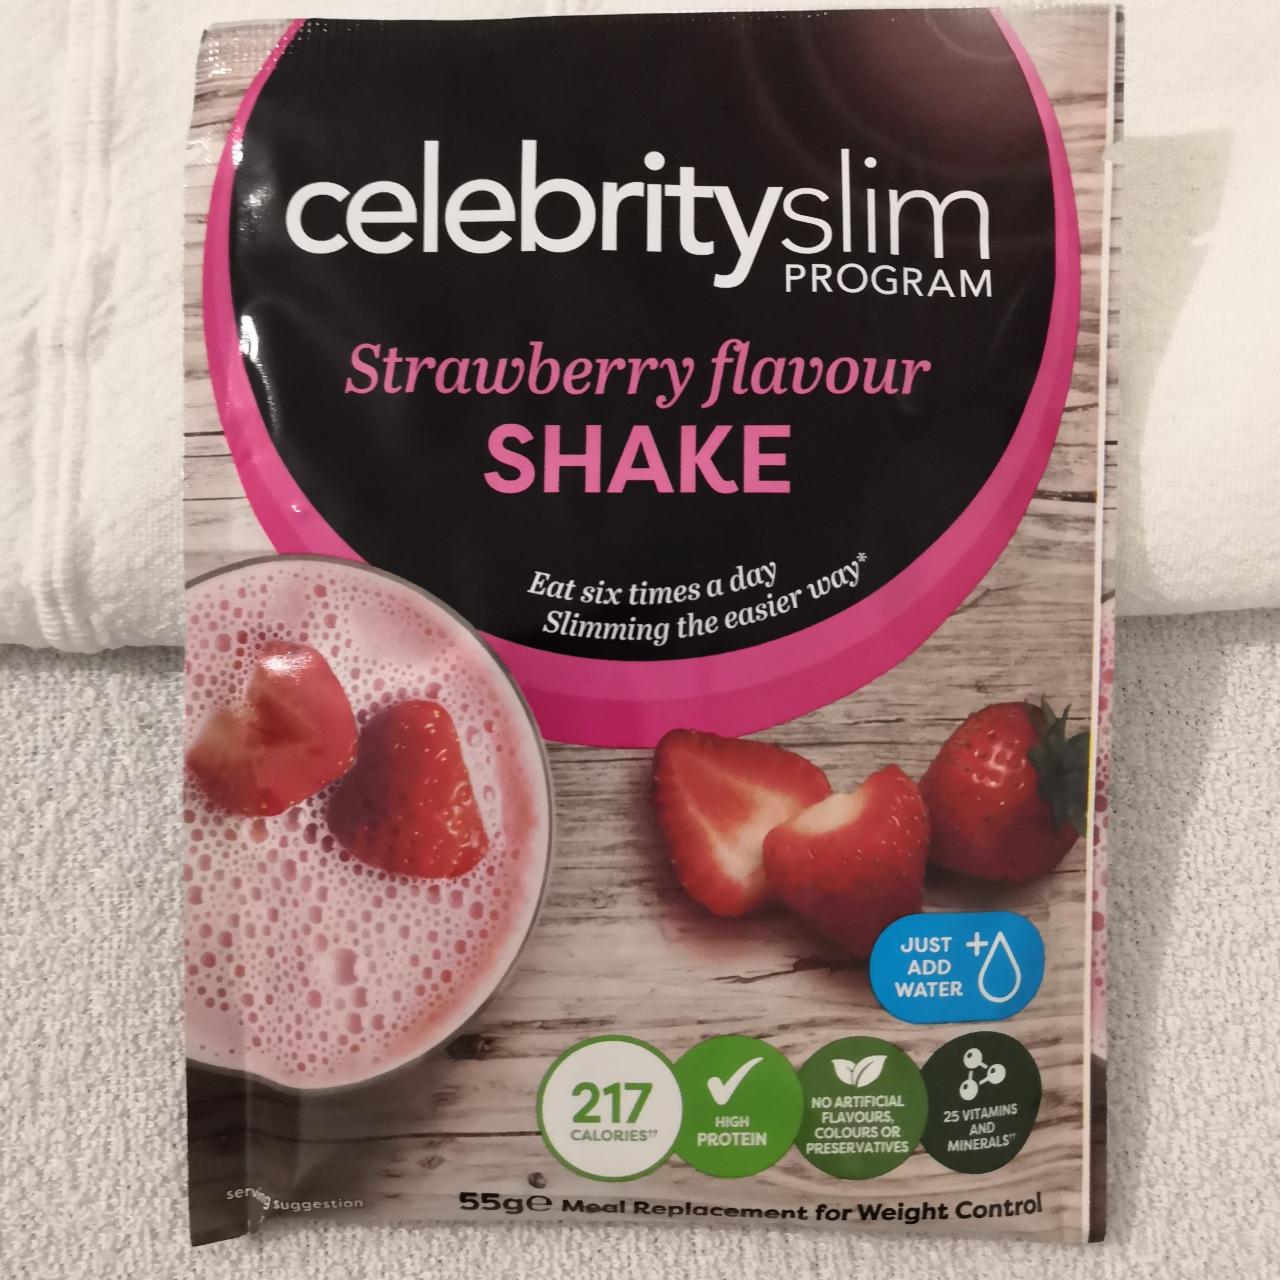 Fotografie - SHAKE Strawberry flavour Celebrity slim